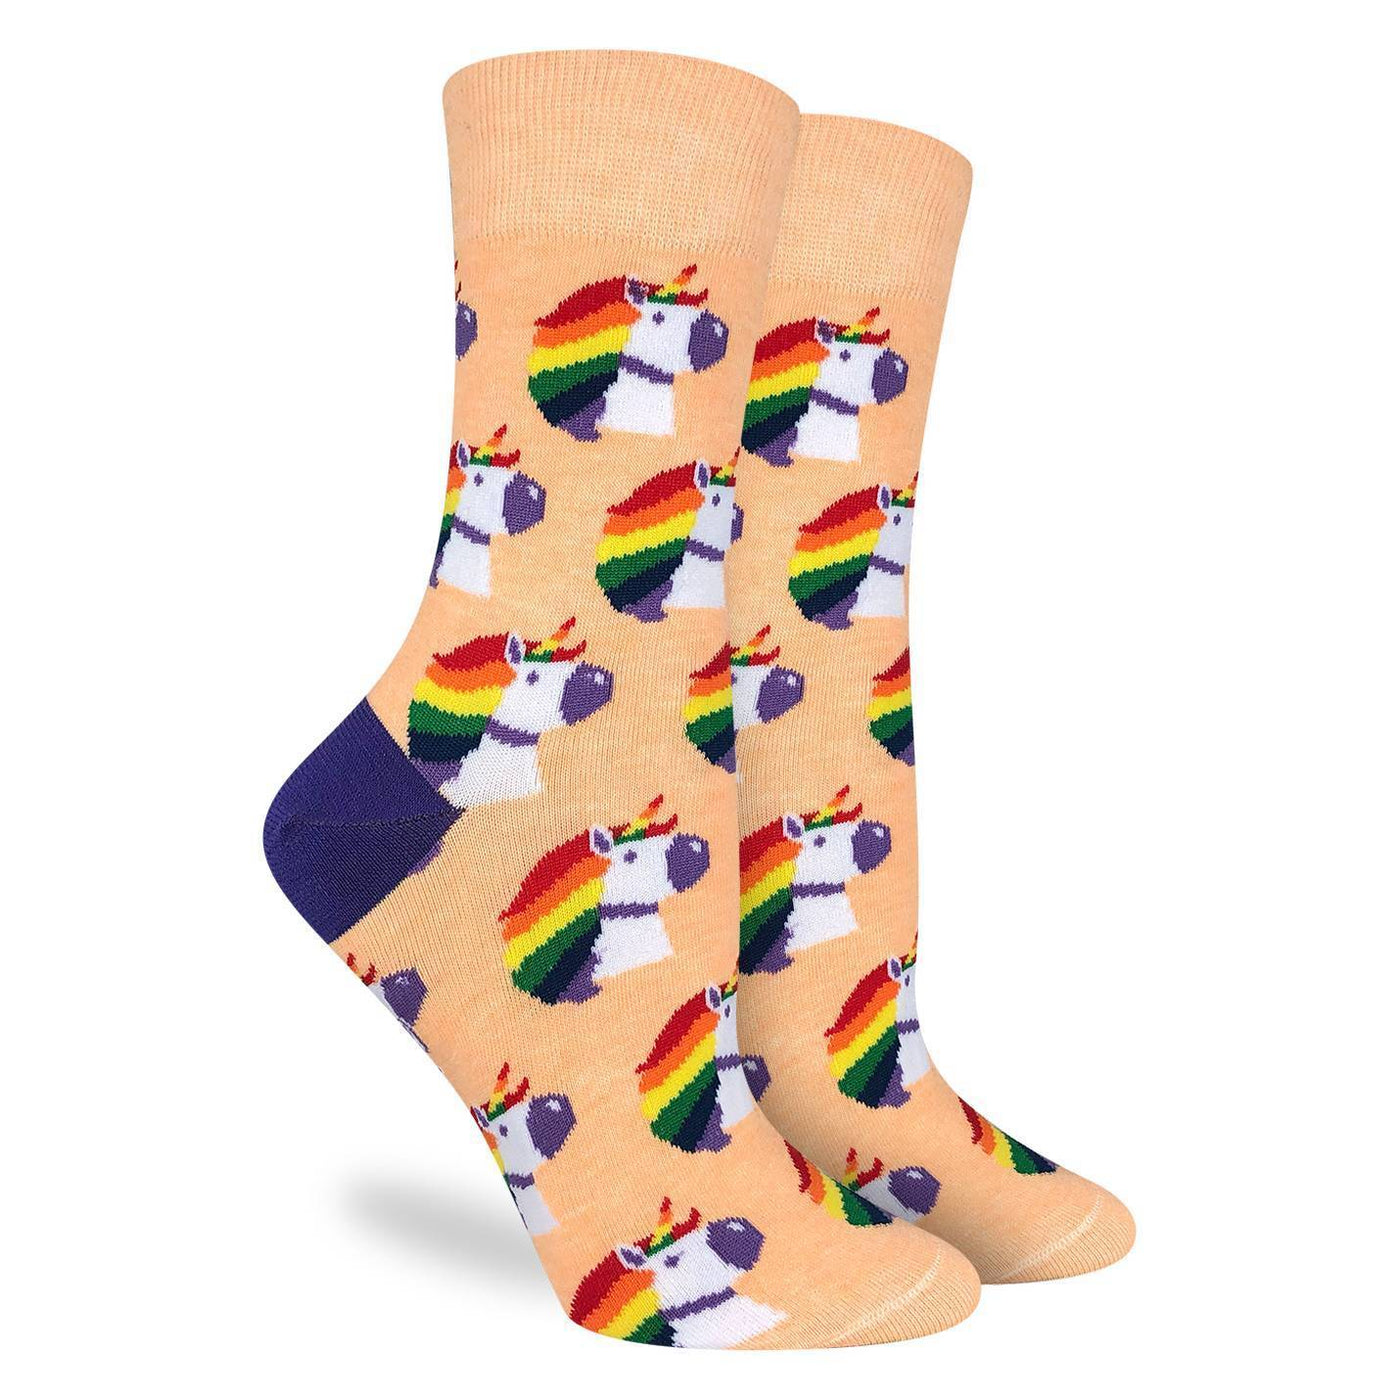 "Rainbow Unicorn" Cotton Crew Socks by Good Luck Sock - Medium